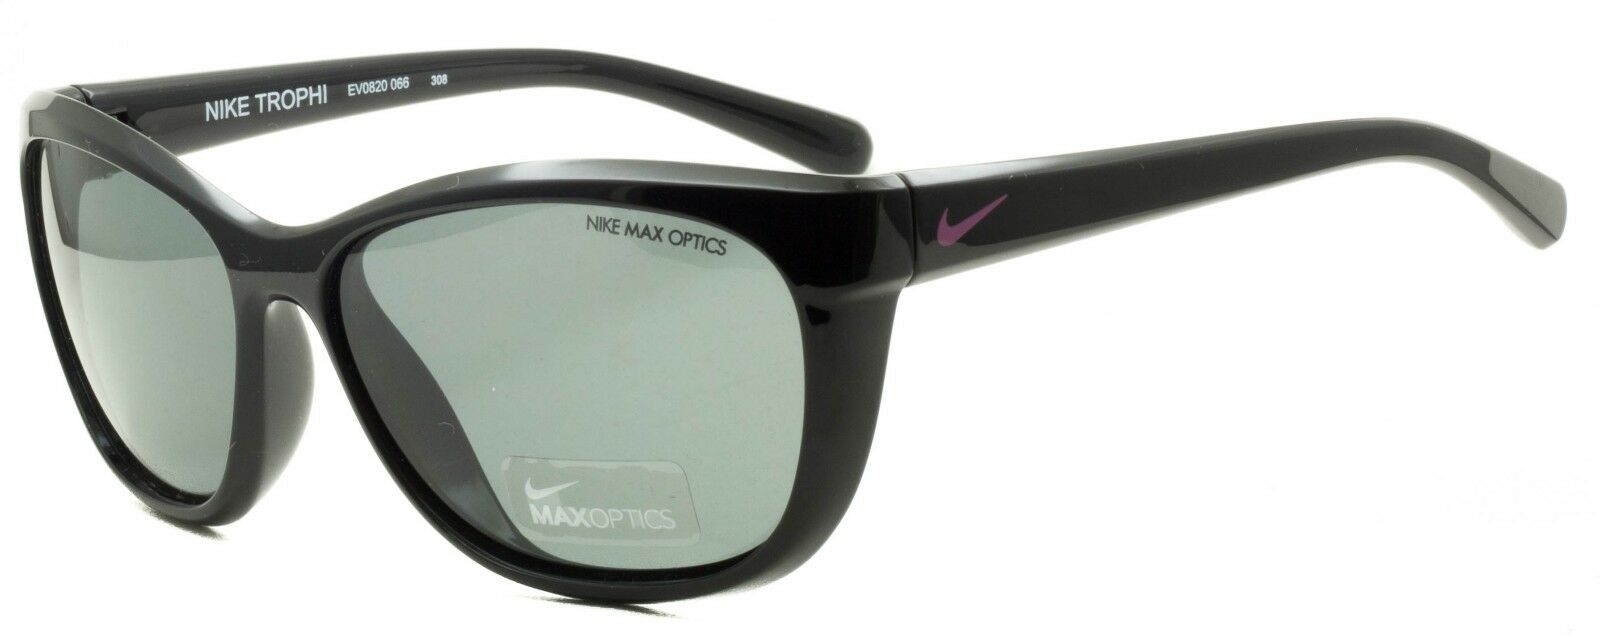 NIKE TROPHI EV0820 066 308 Max Optics Sunglasses Eyewear Shades - New - TRUSTED